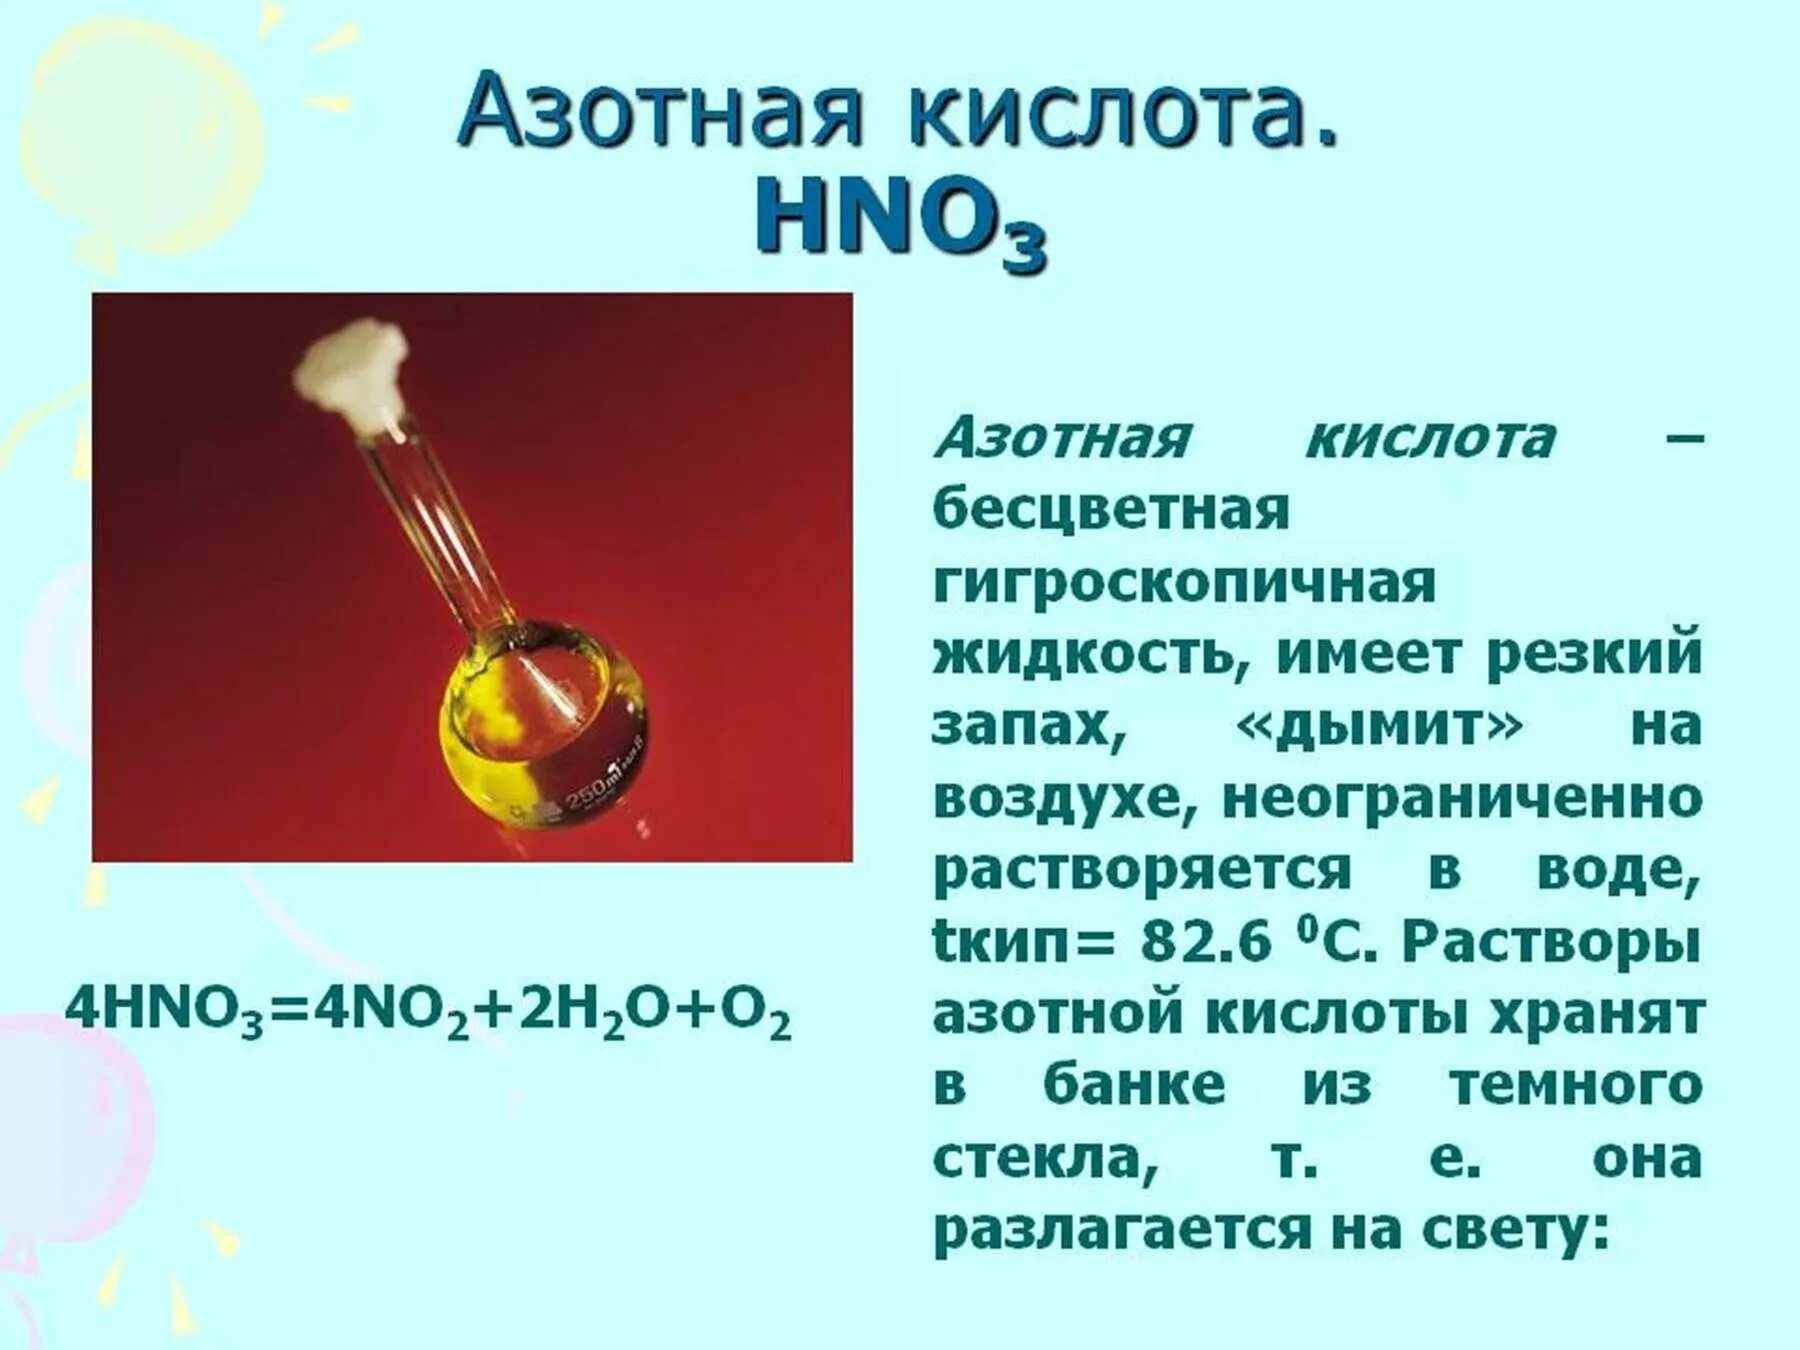 Азотная кислота hno3. Азотная кислота обладает резким запахом. Слайд азотная кислота. Раствор азотной кислоты. Азотная кислота является сильным